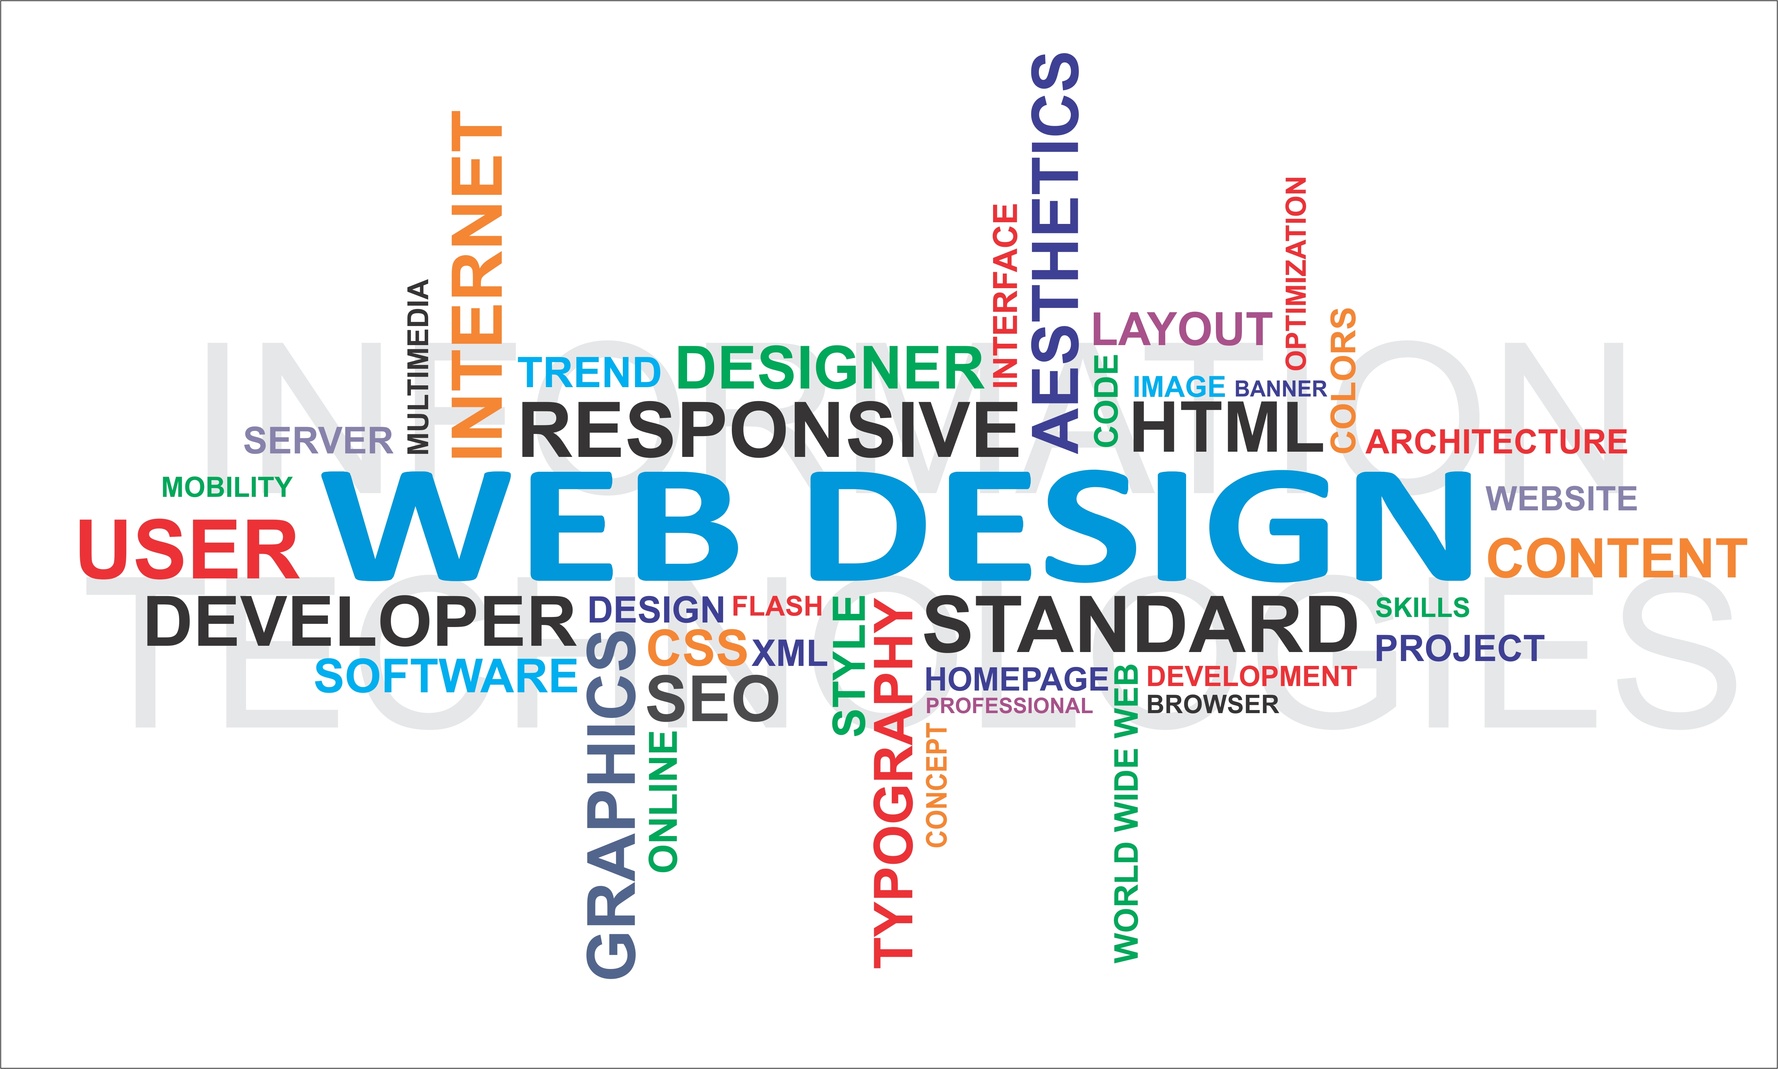 Word cloud - web design